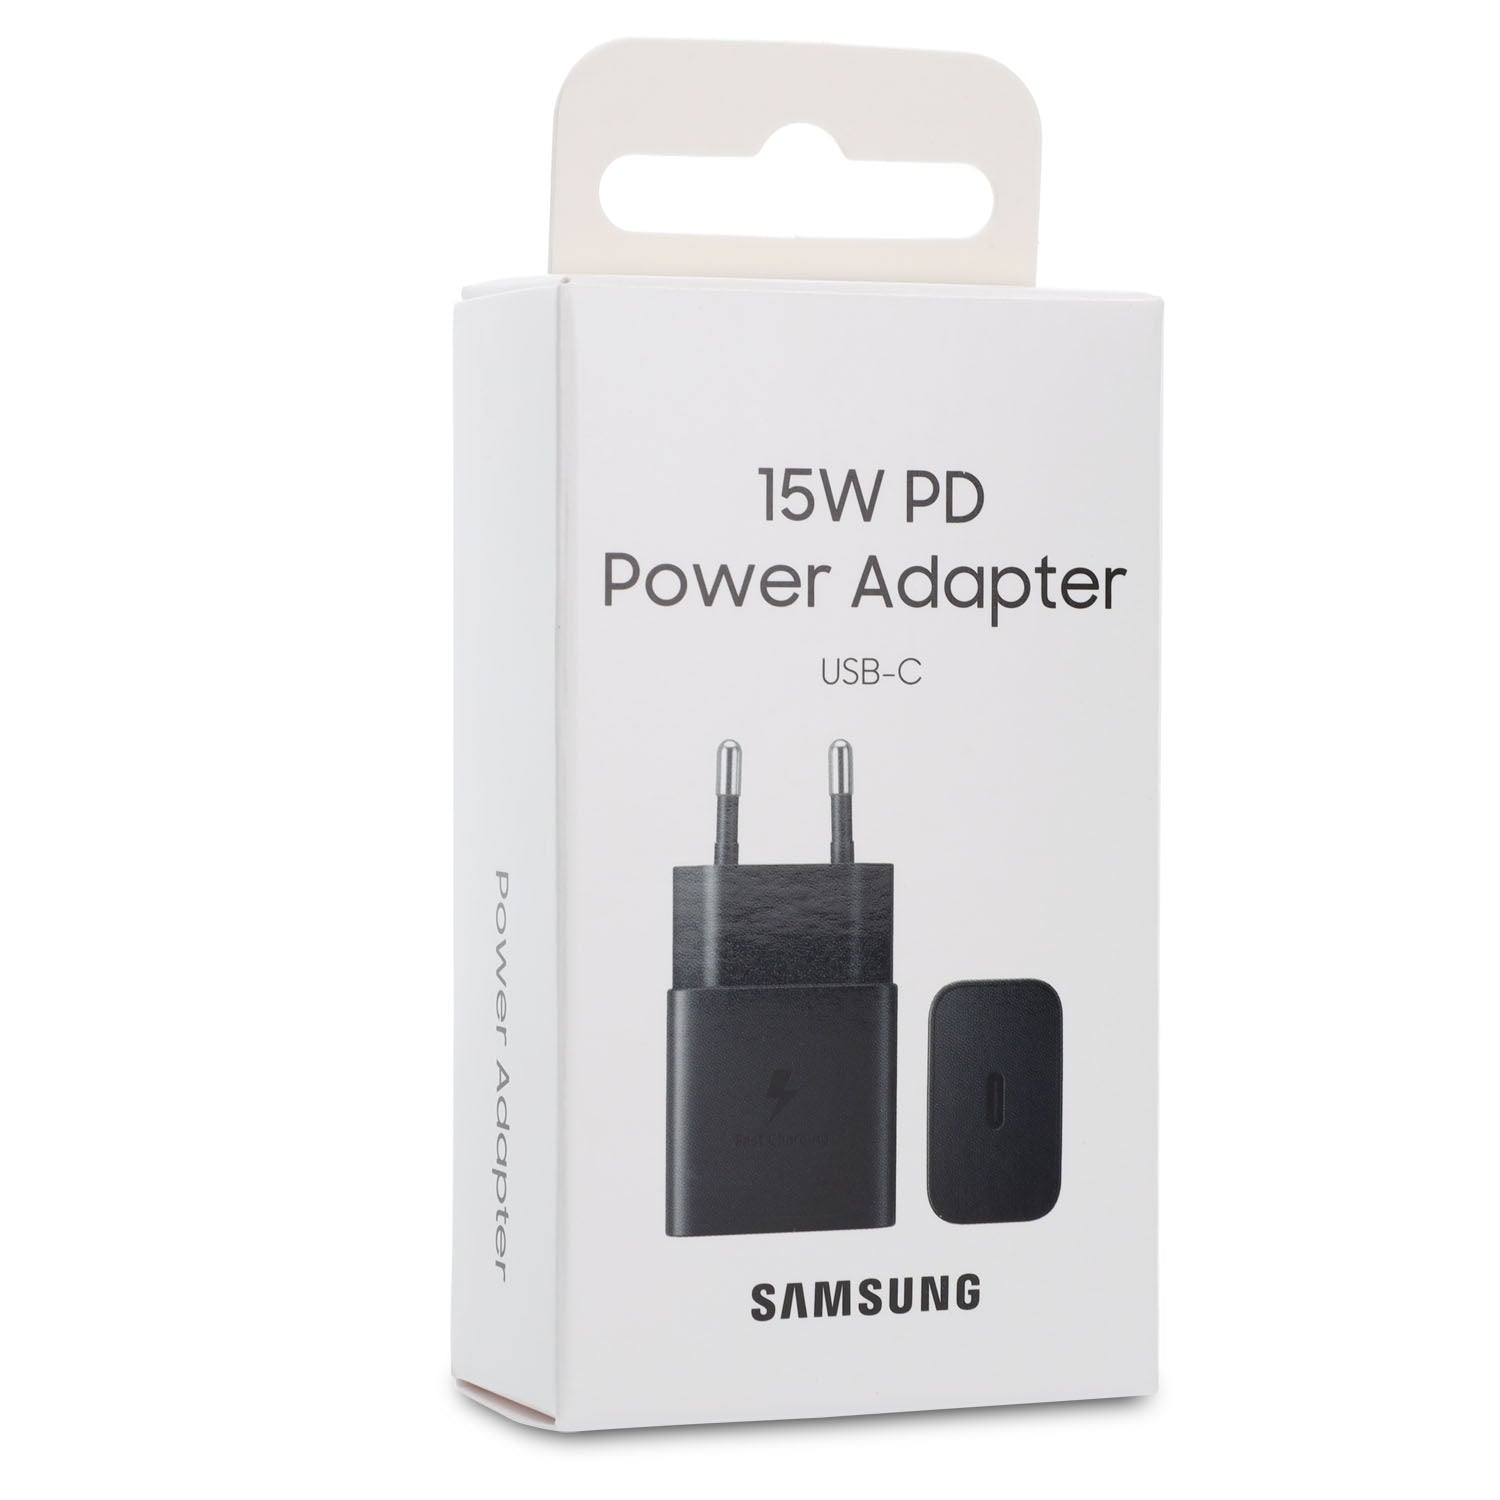 Samsung 15W PD Power Adapter USB-C